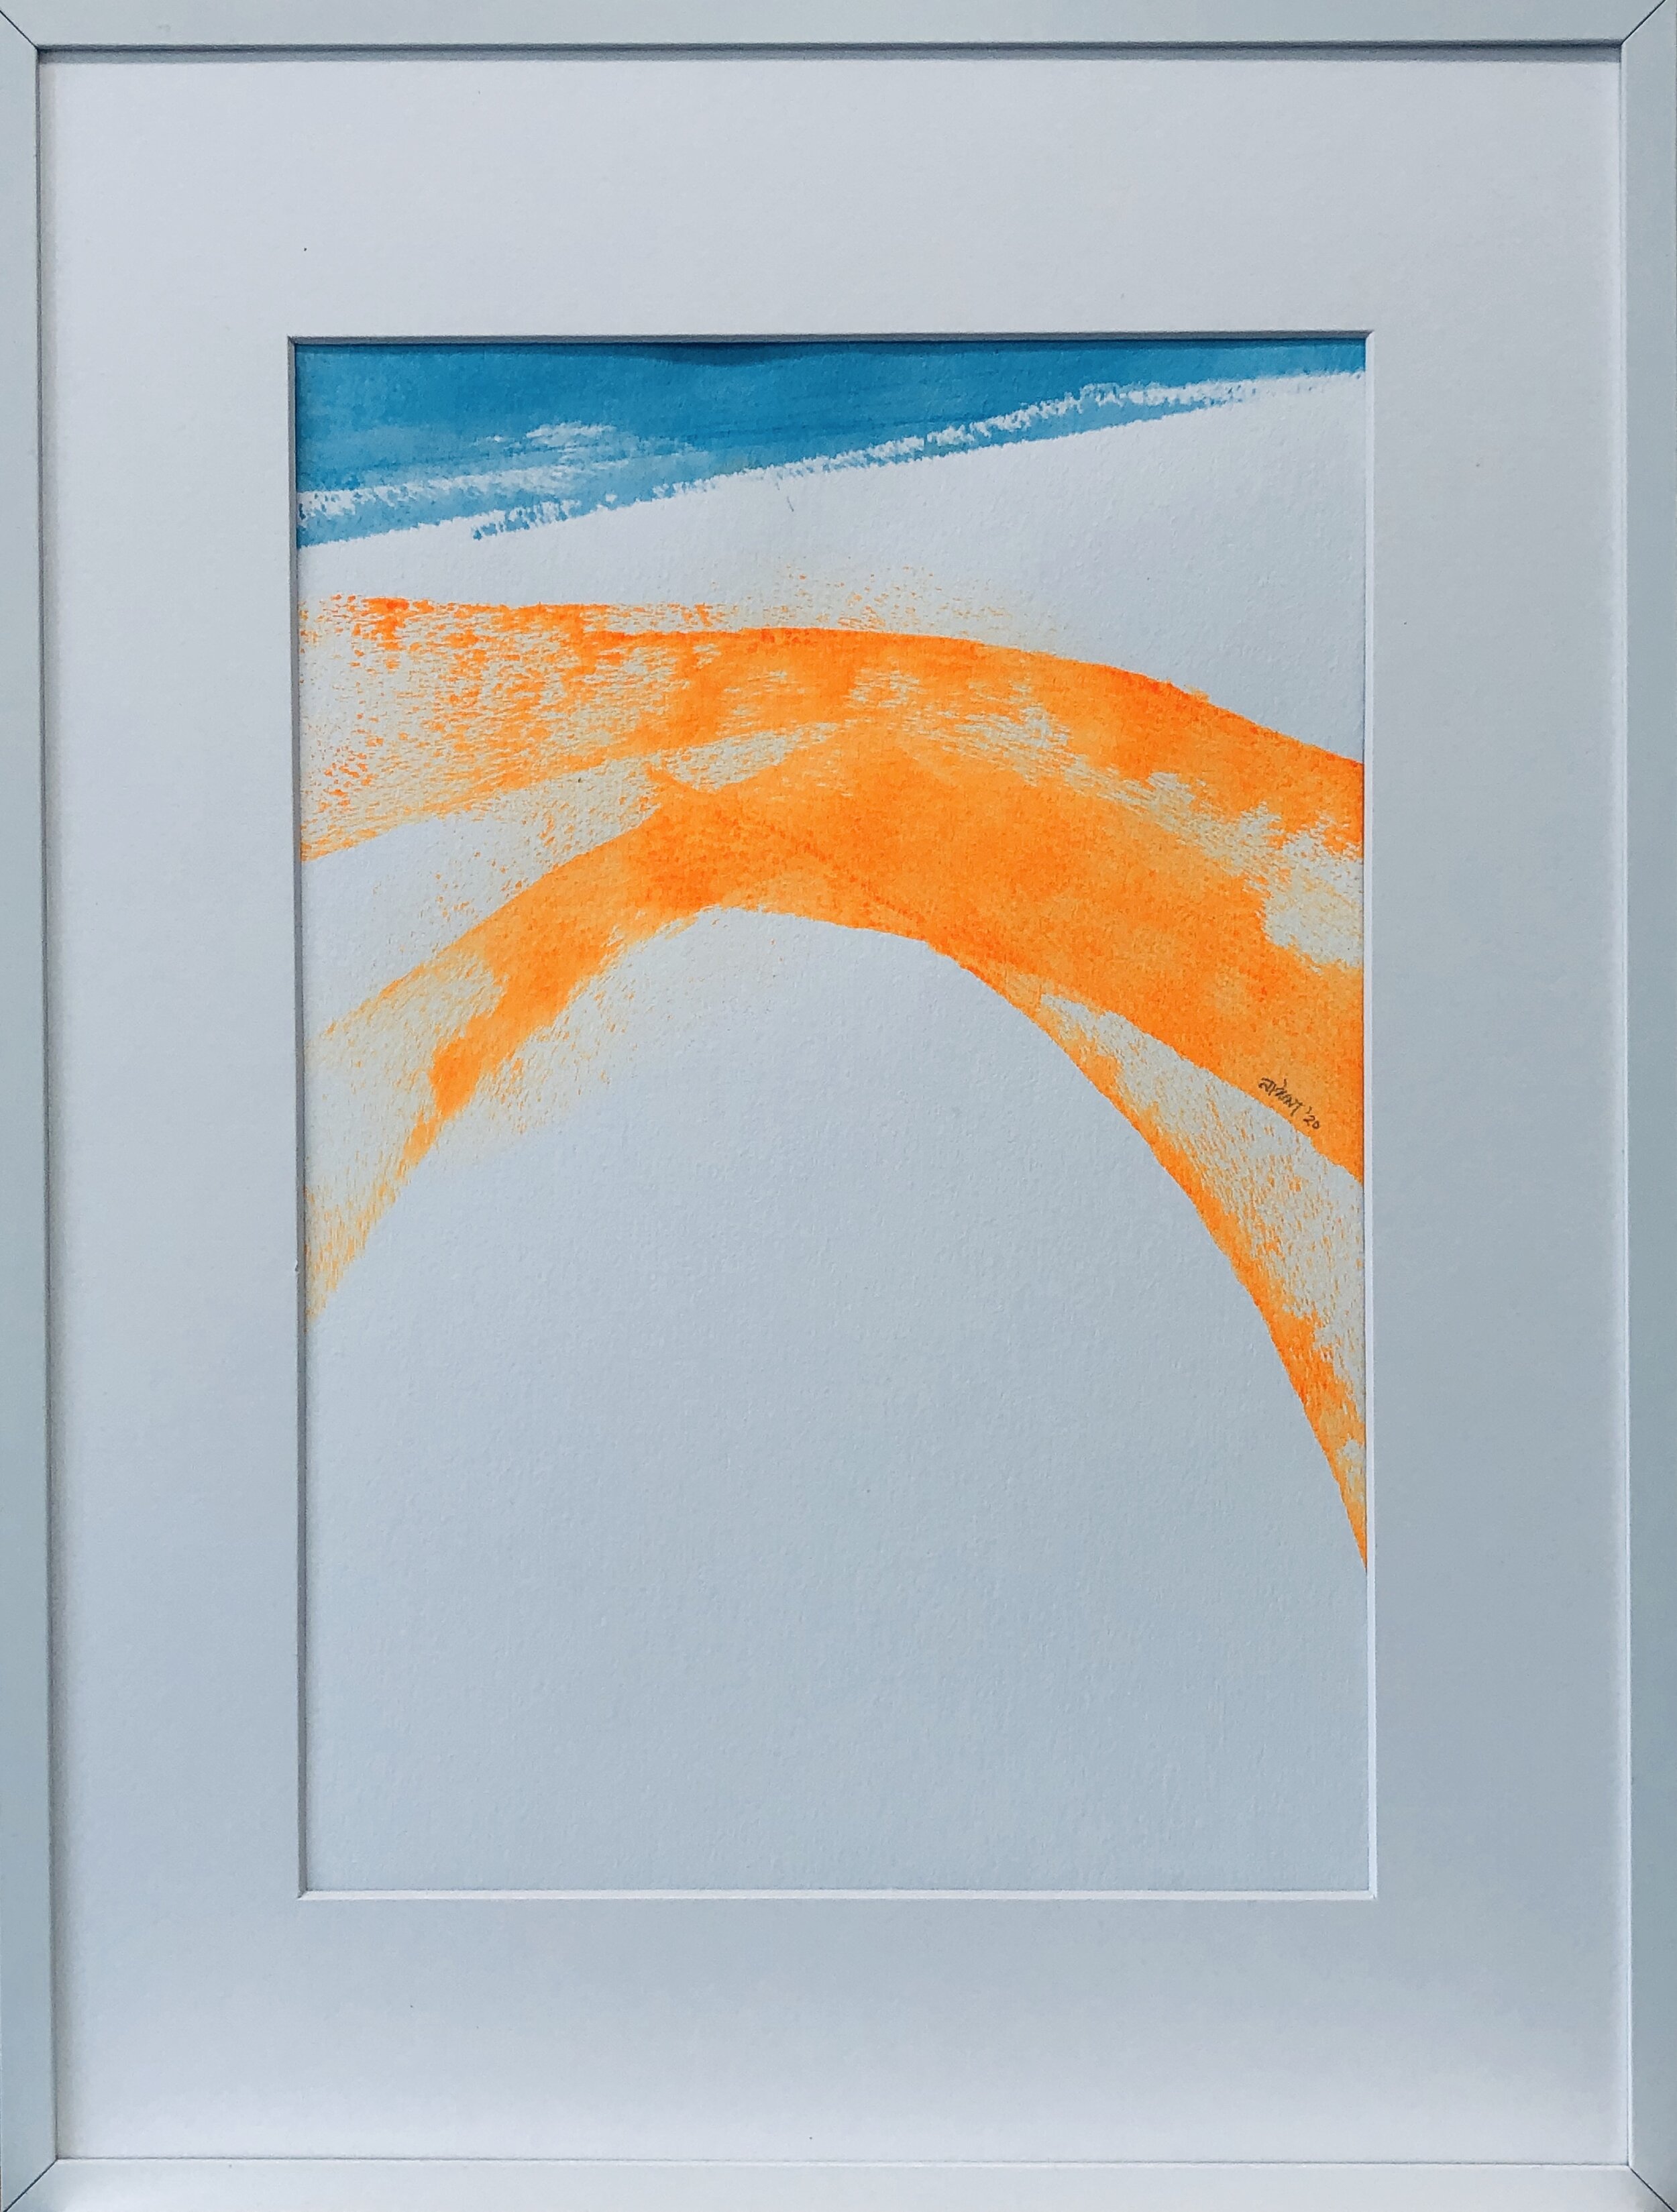  Desert Sky 13  Watercolor on paper  30x40cm 